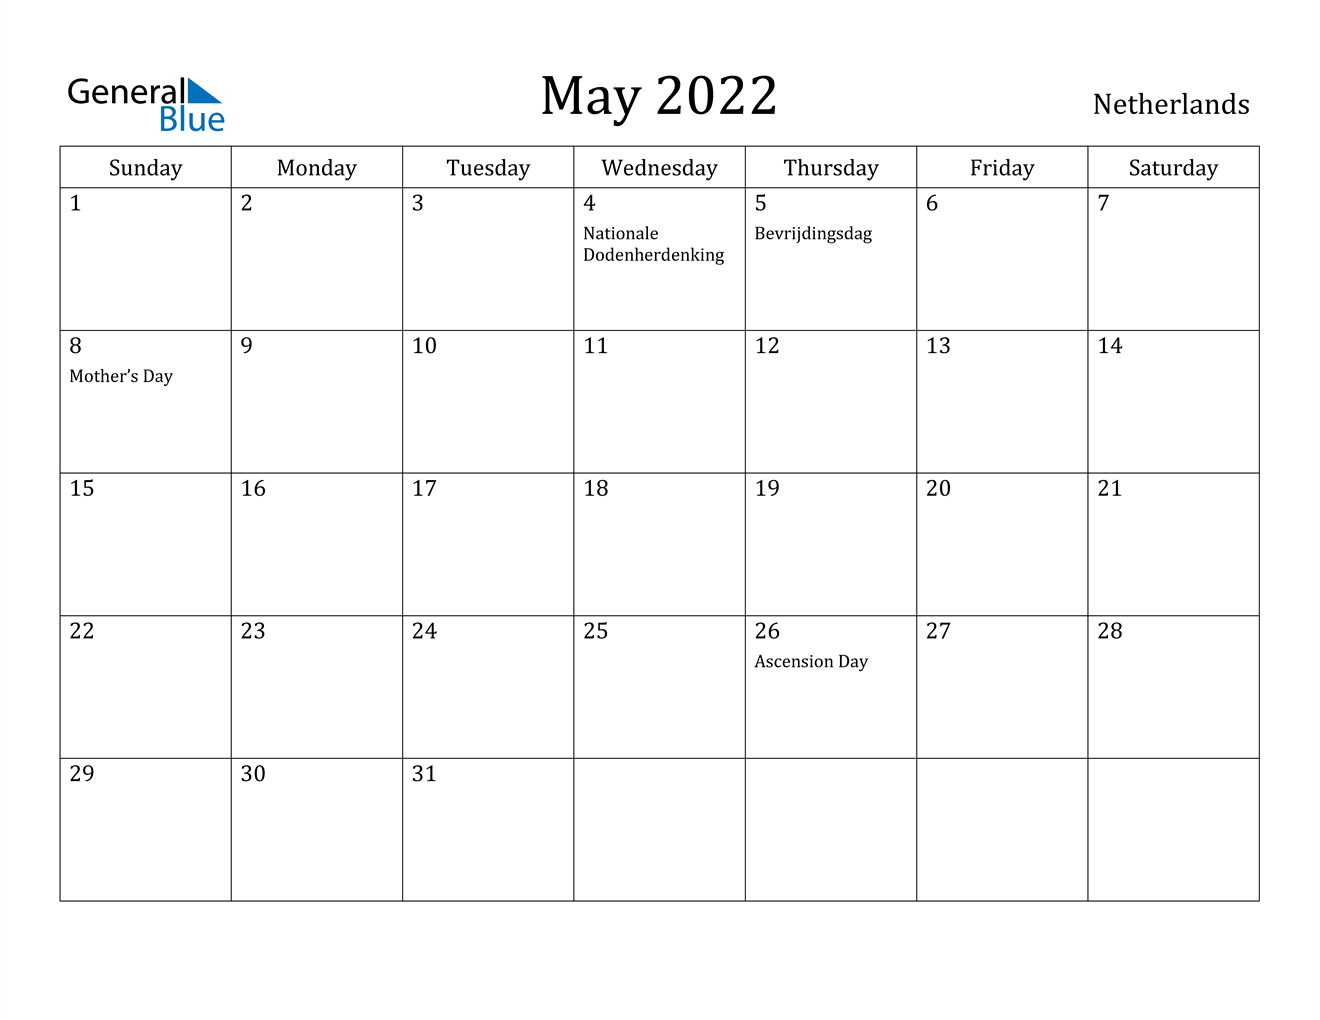 May 2022 Calendar - Netherlands